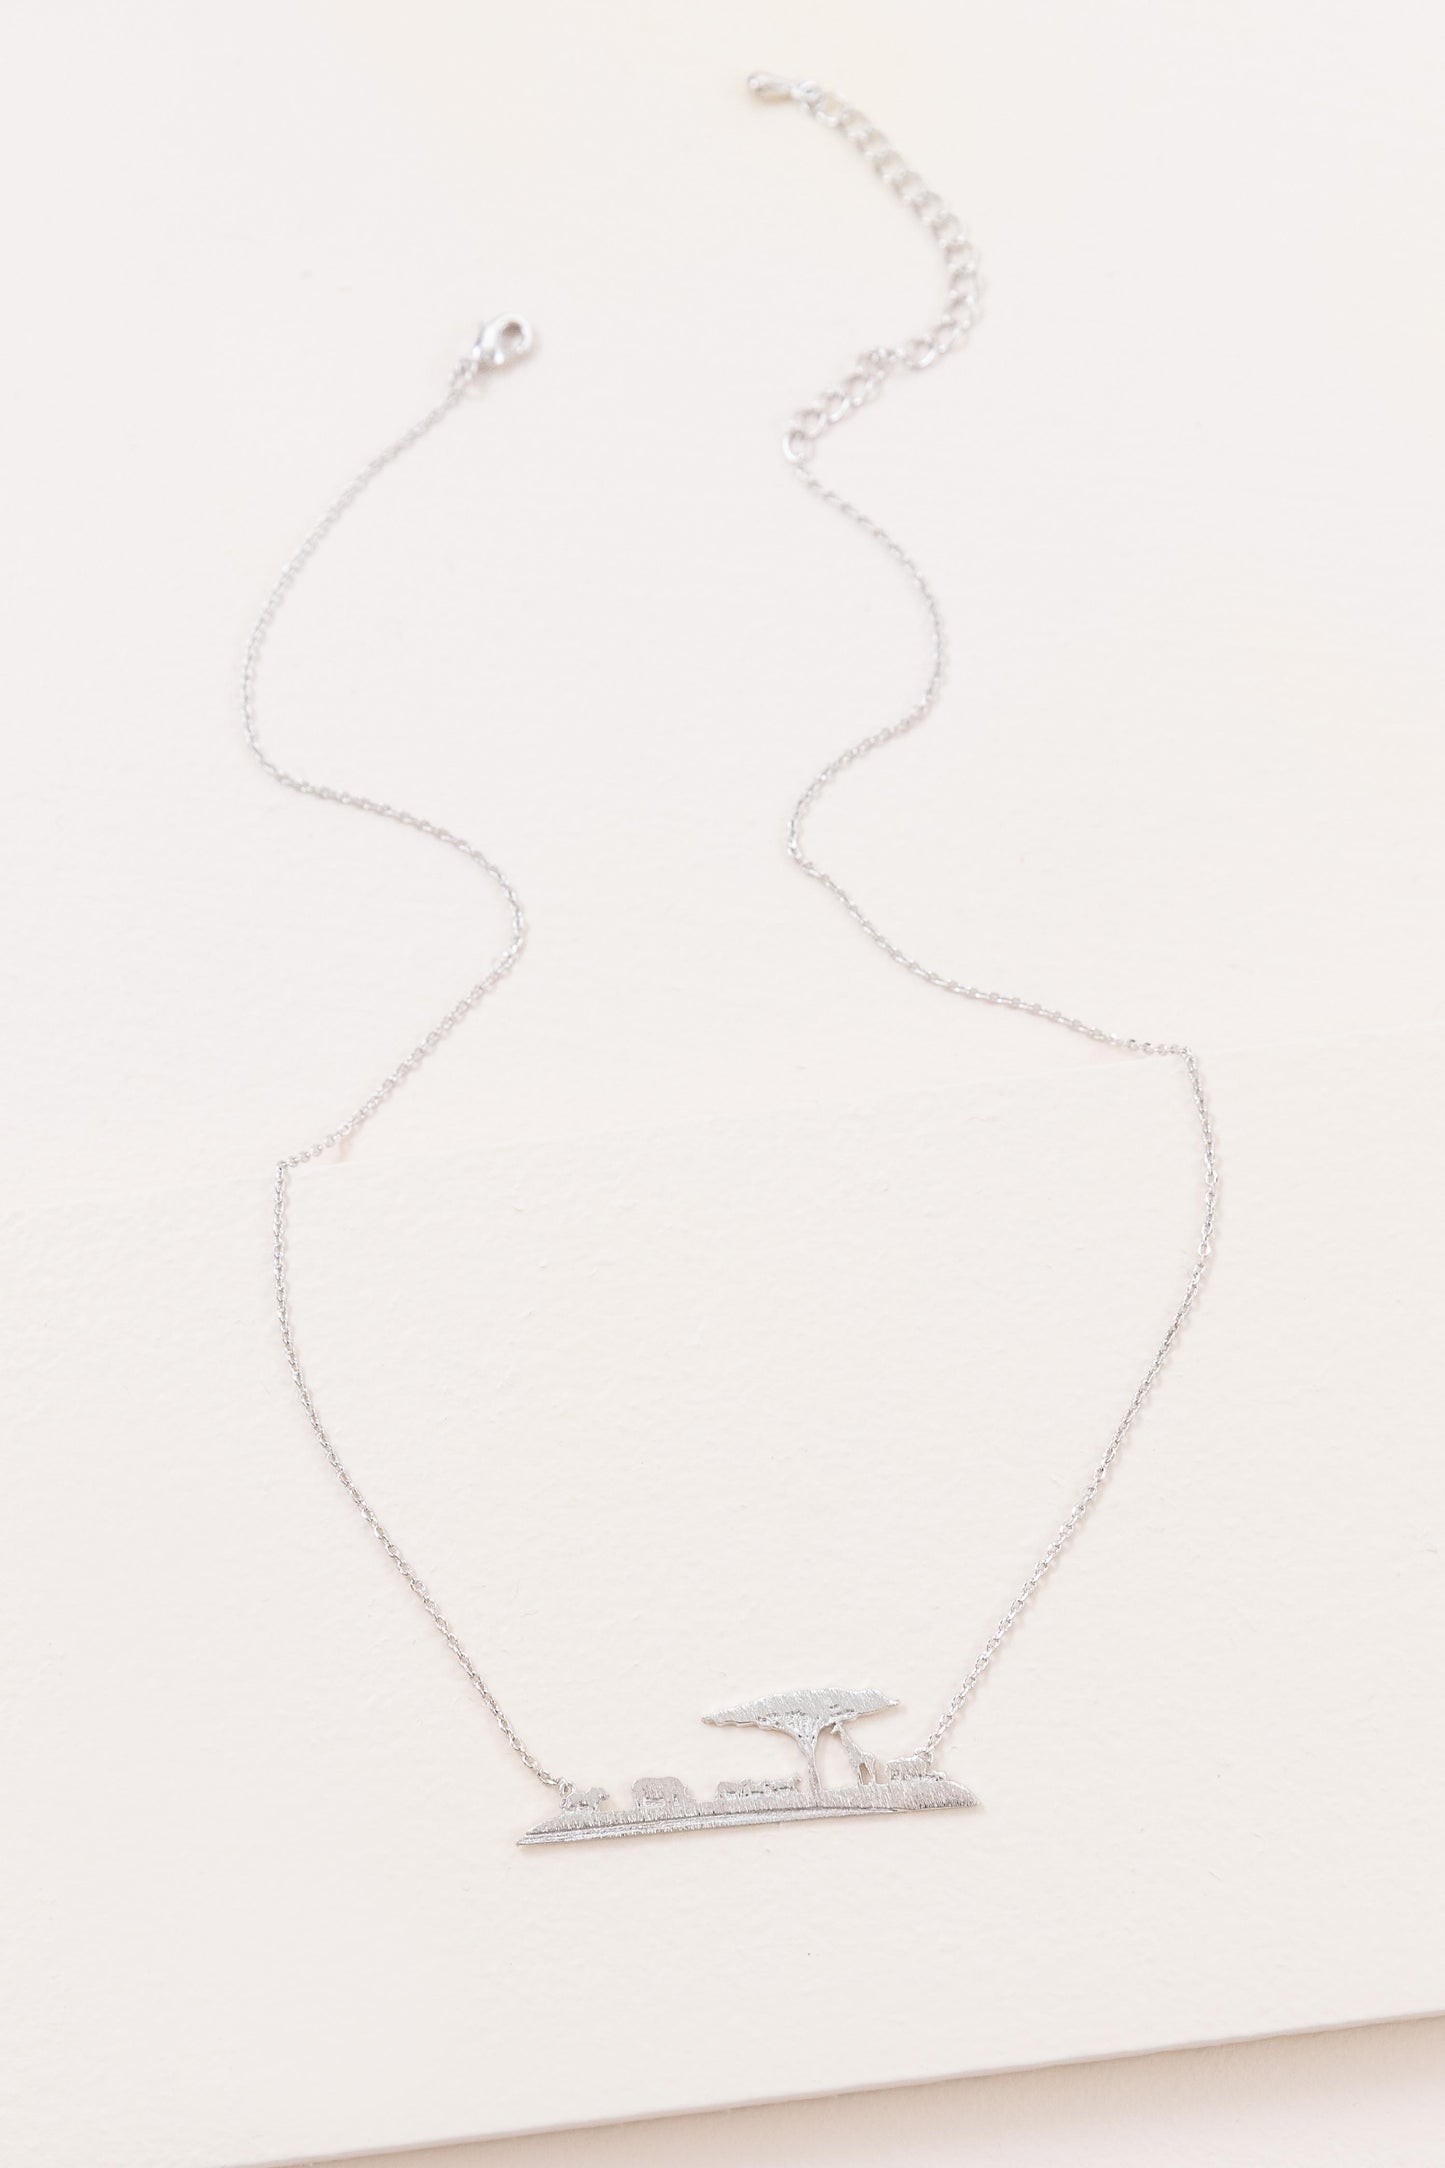 Safari Necklace